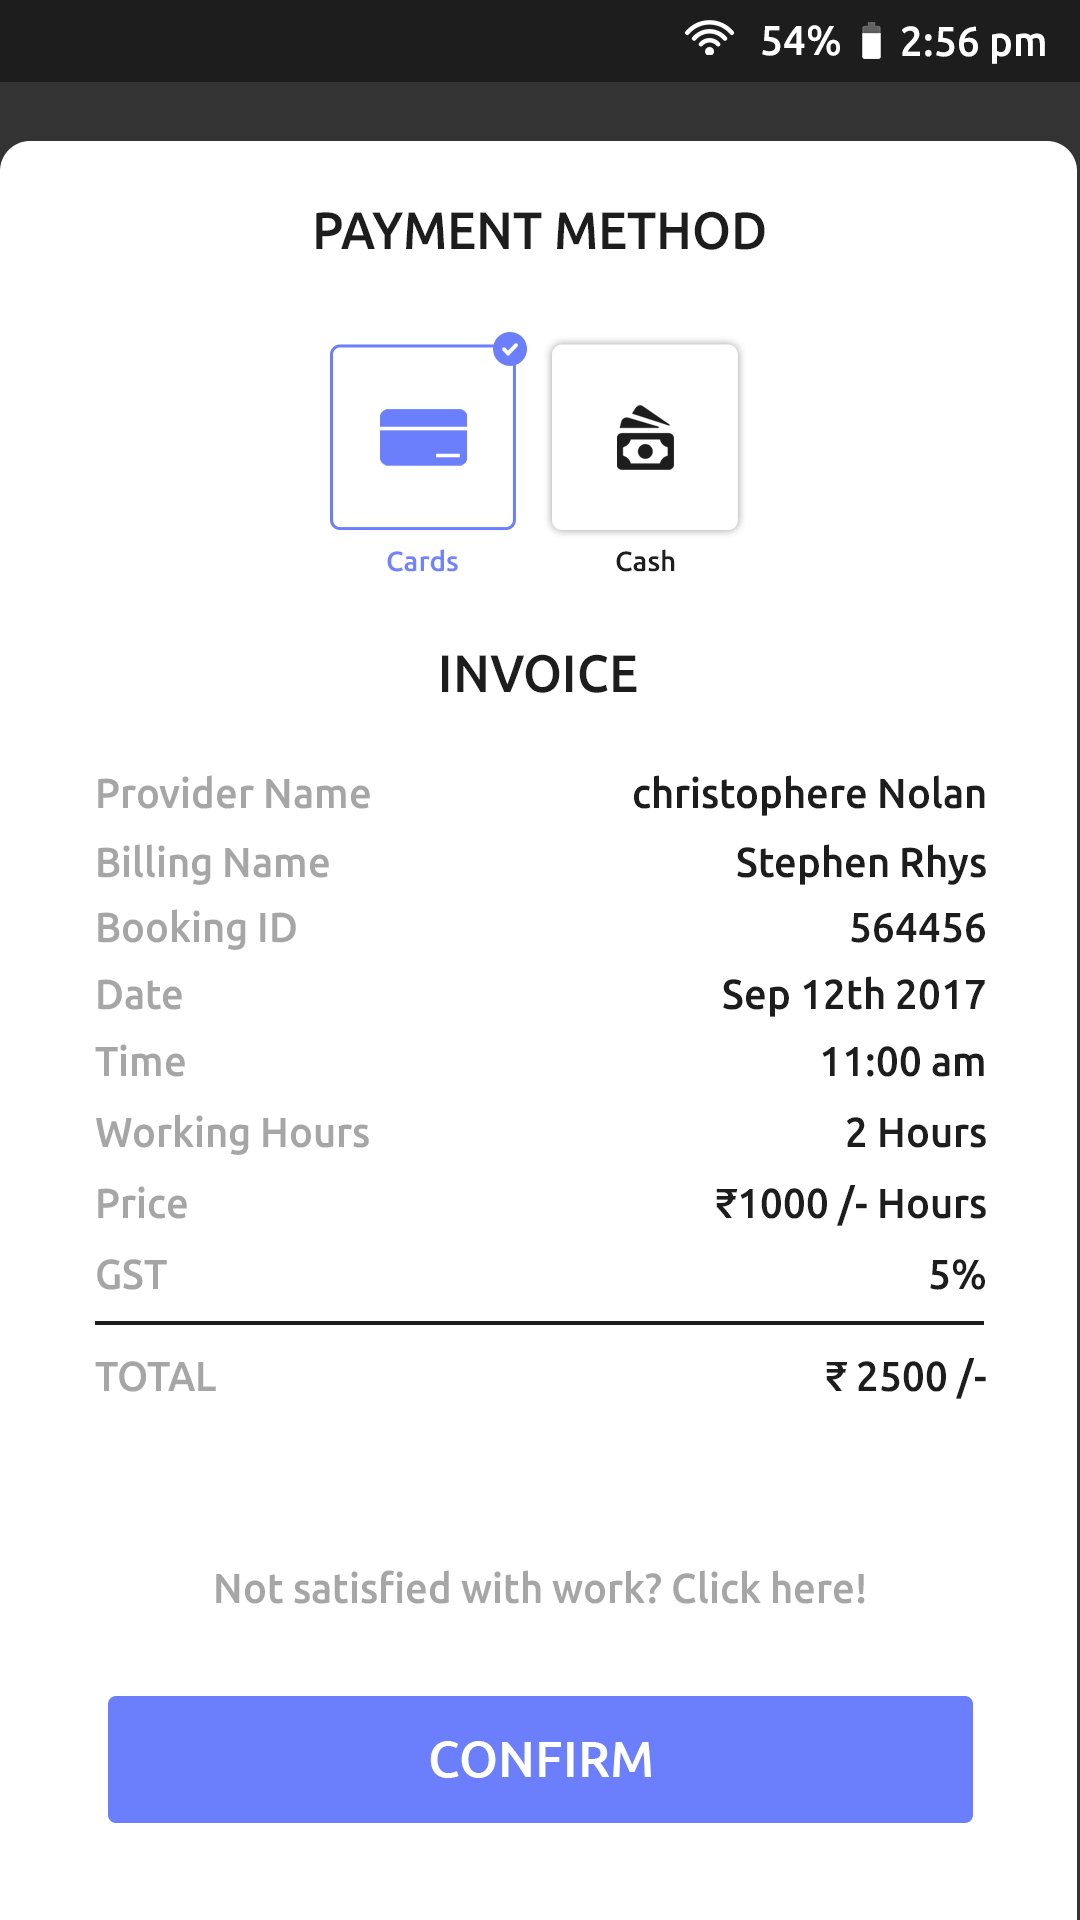 Uber For X Order Tracking